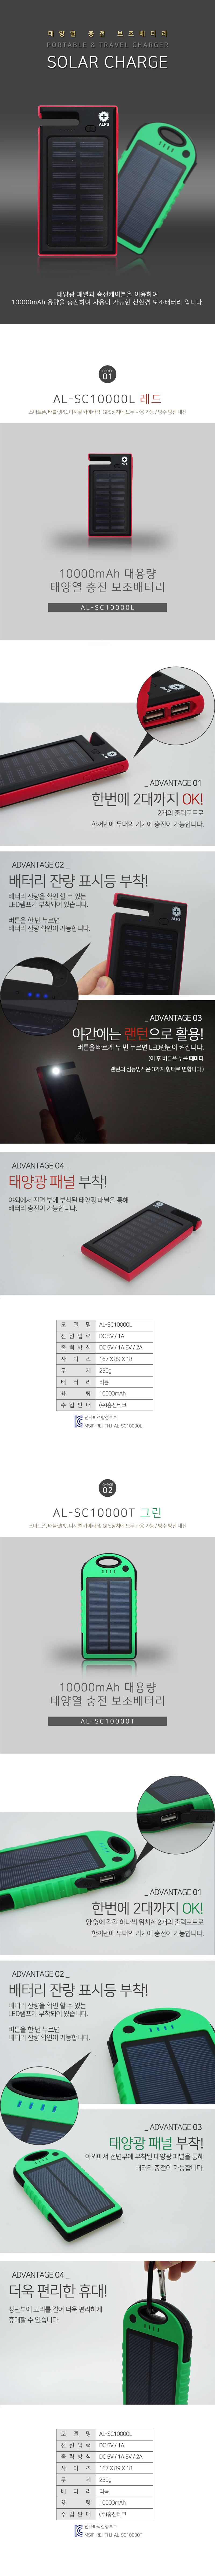 solar charger 800.jpg